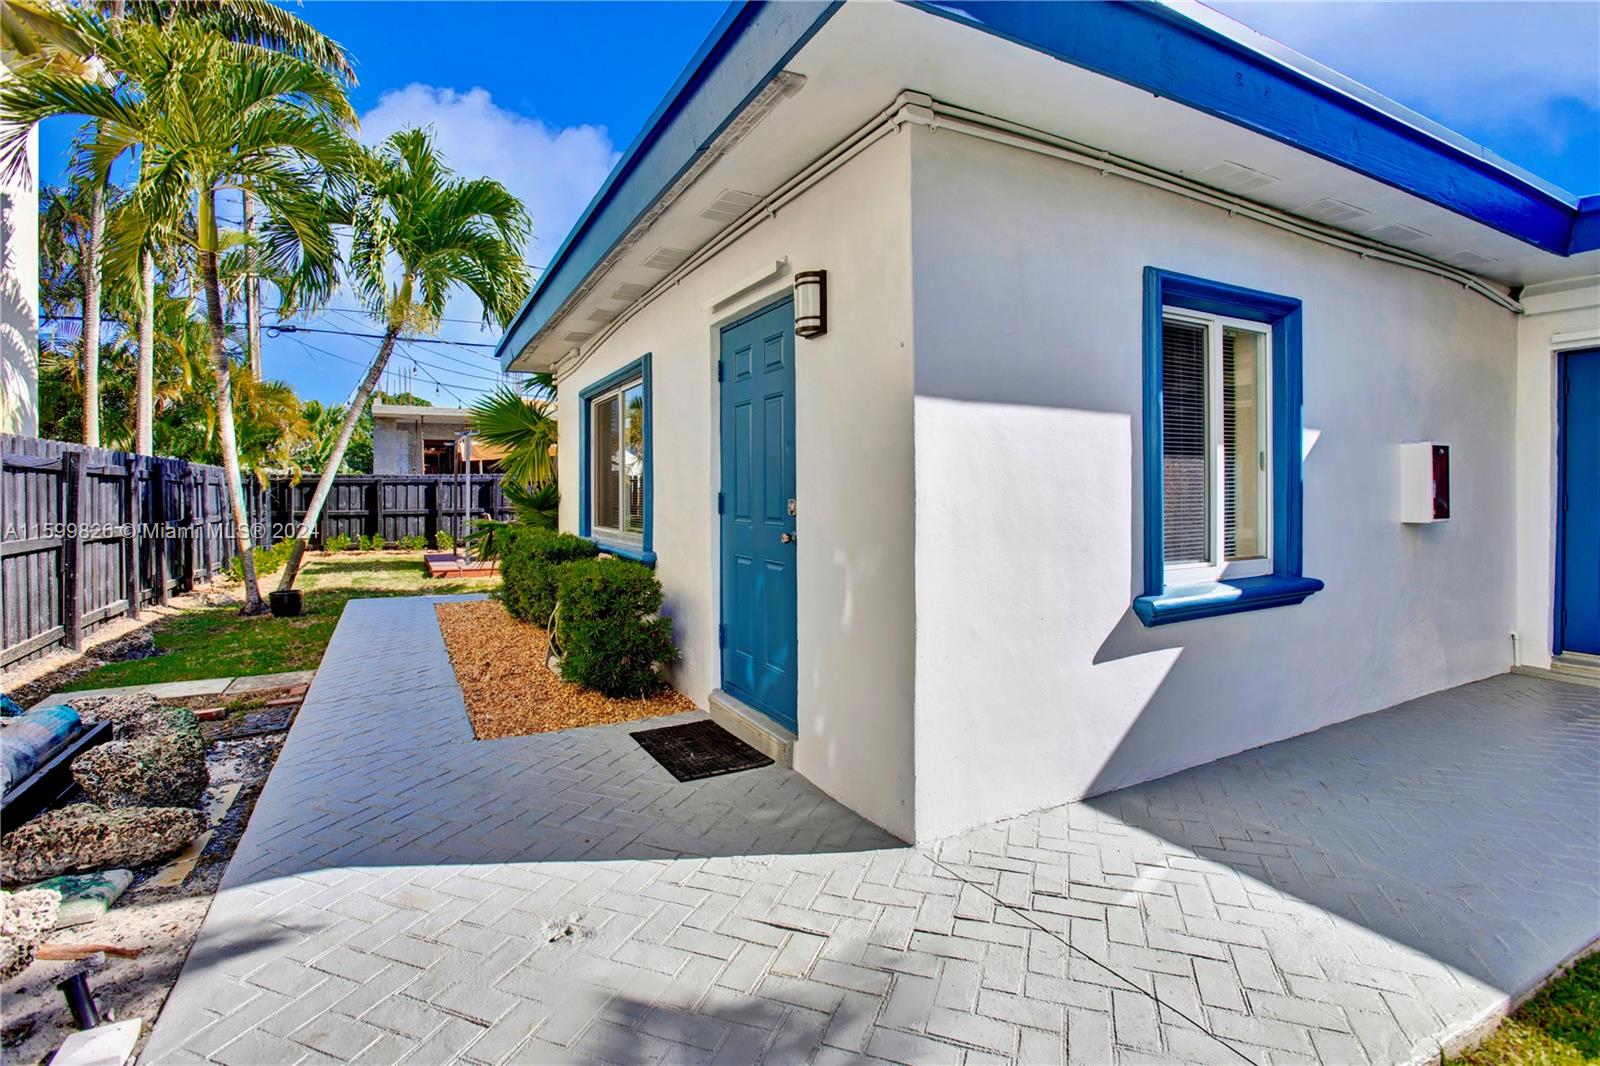 Rental Property at 1104 Ne 16th Ave, Fort Lauderdale, Broward County, Florida -  - $838,000 MO.